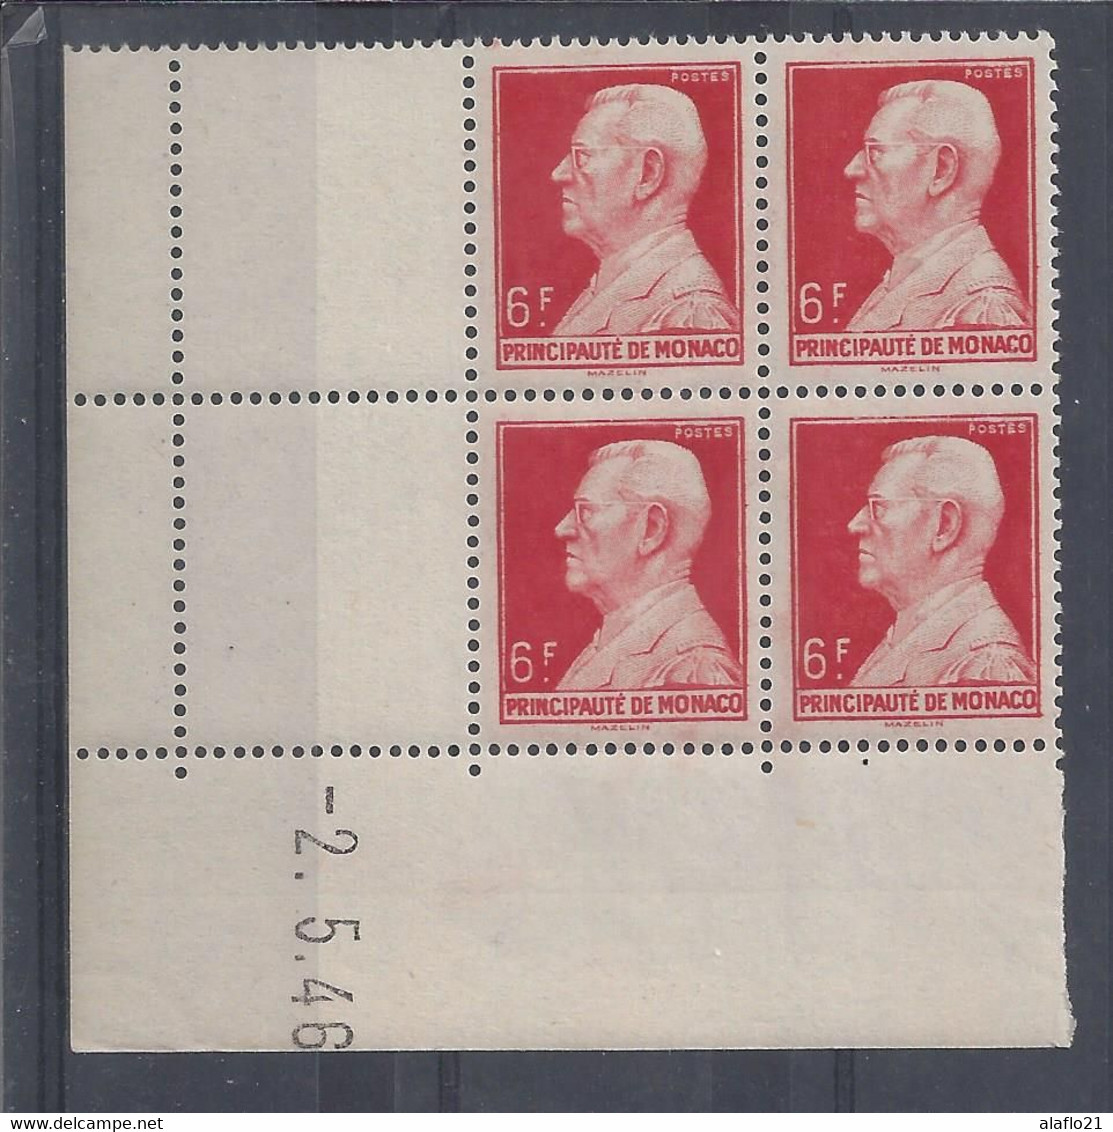 MONACO - N° 283 - PRINCE LOUIS II - Bloc De 4 COIN DATE - NEUF SANS CHARNIERE - 2/5/46 - Unused Stamps